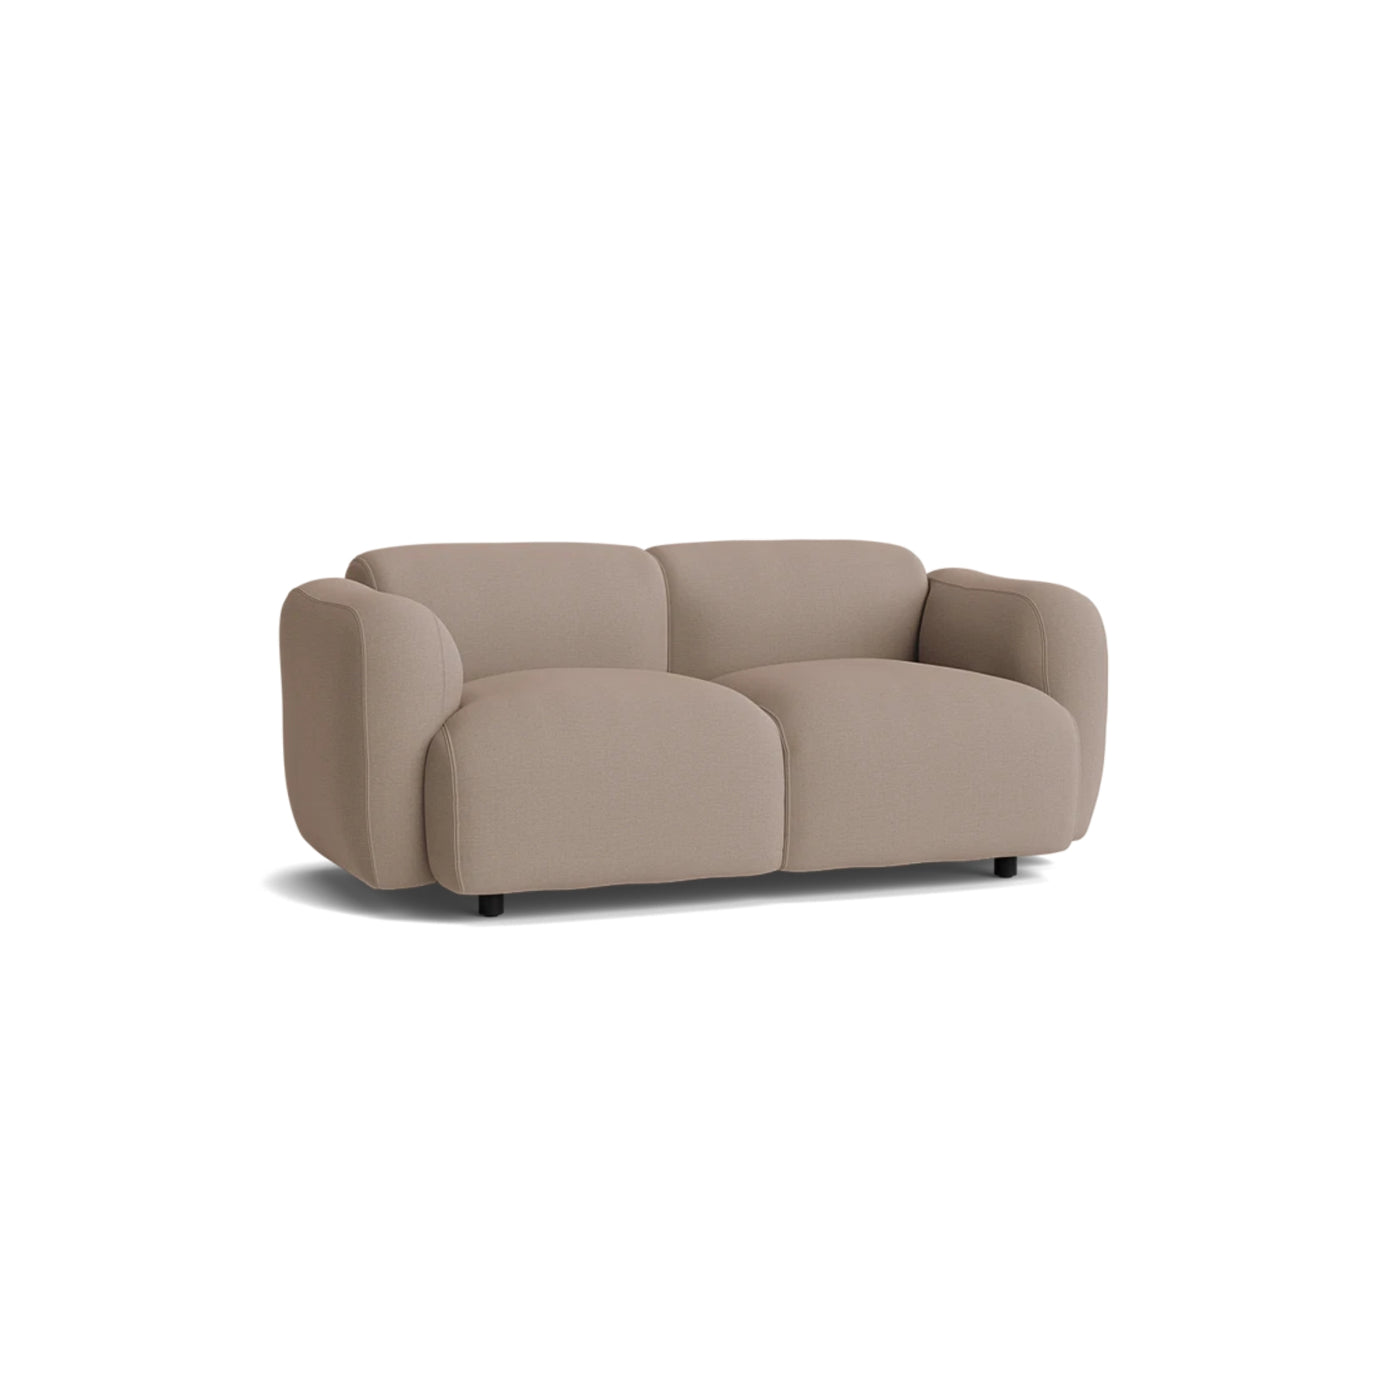 Normann Copenhagen Swell 2 Seater Sofa at someday designs. #colour_steelcut-trio-426